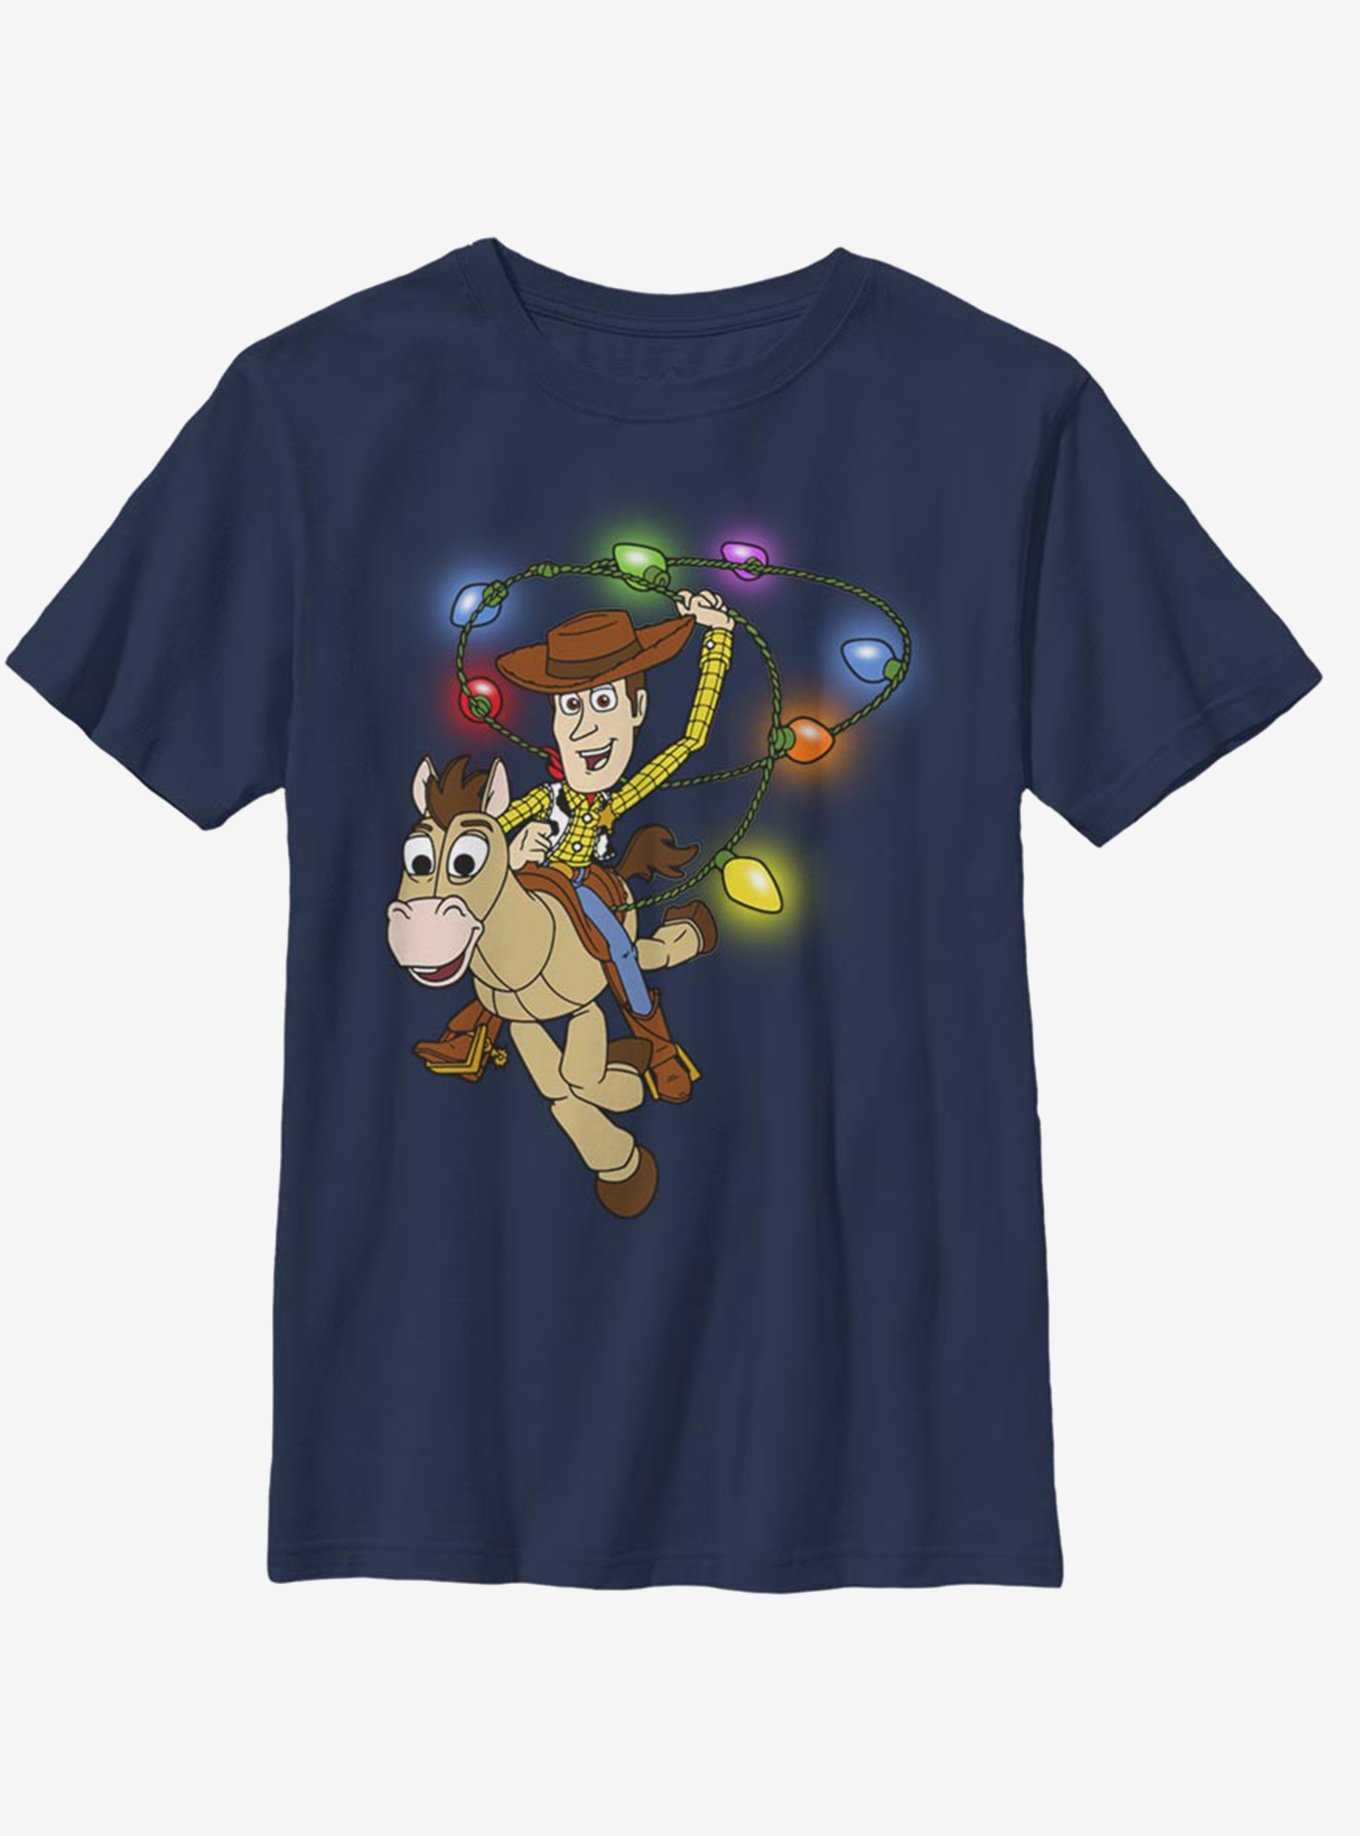 Disney Pixar Toy Story Lasso Lights Youth T-Shirt, , hi-res